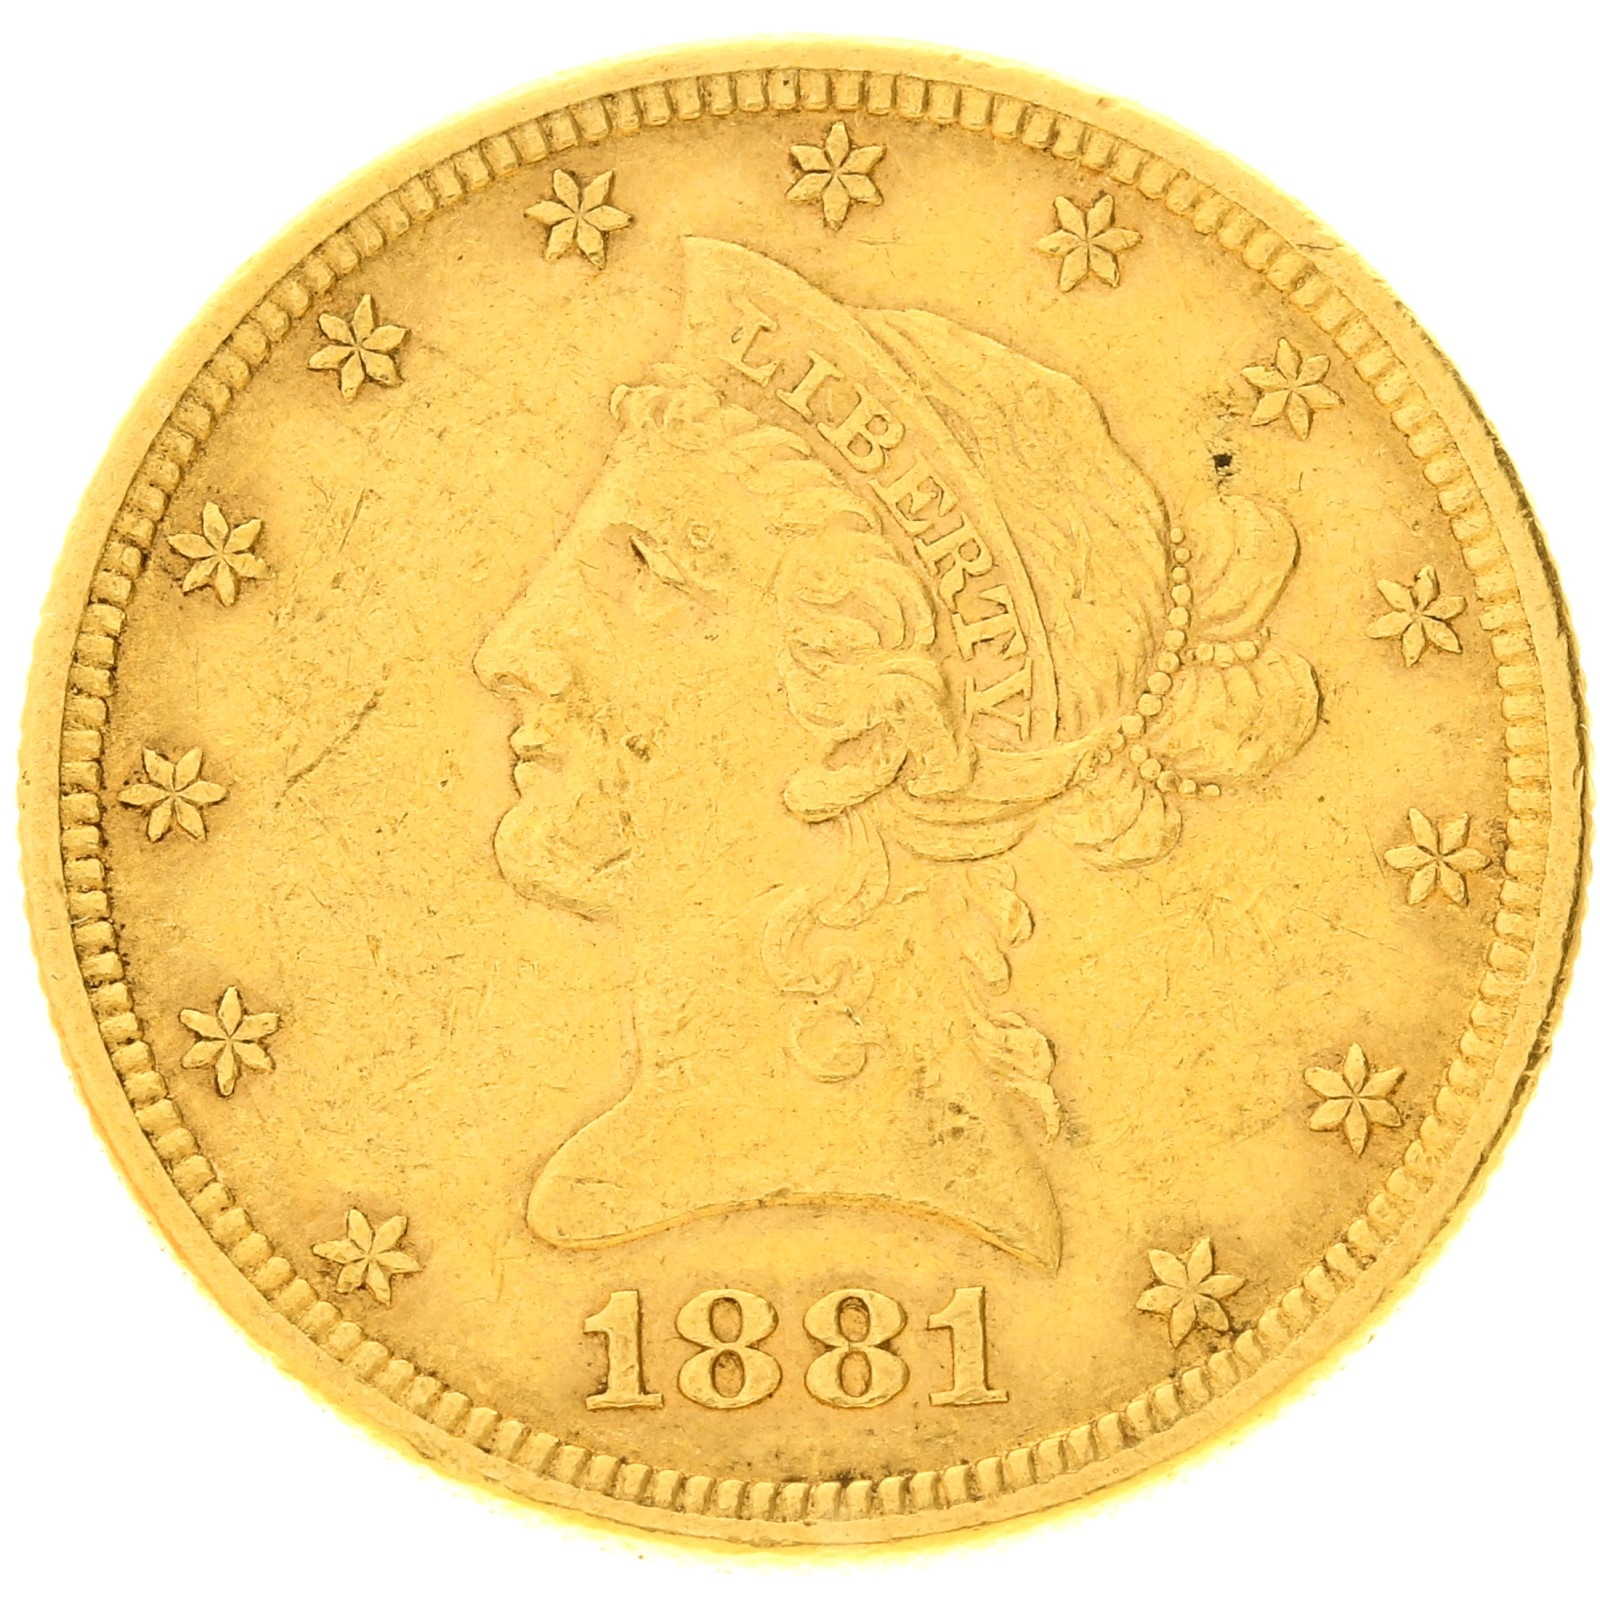 USA - 10 dollars - 1881 - Coronet Head Eagle 